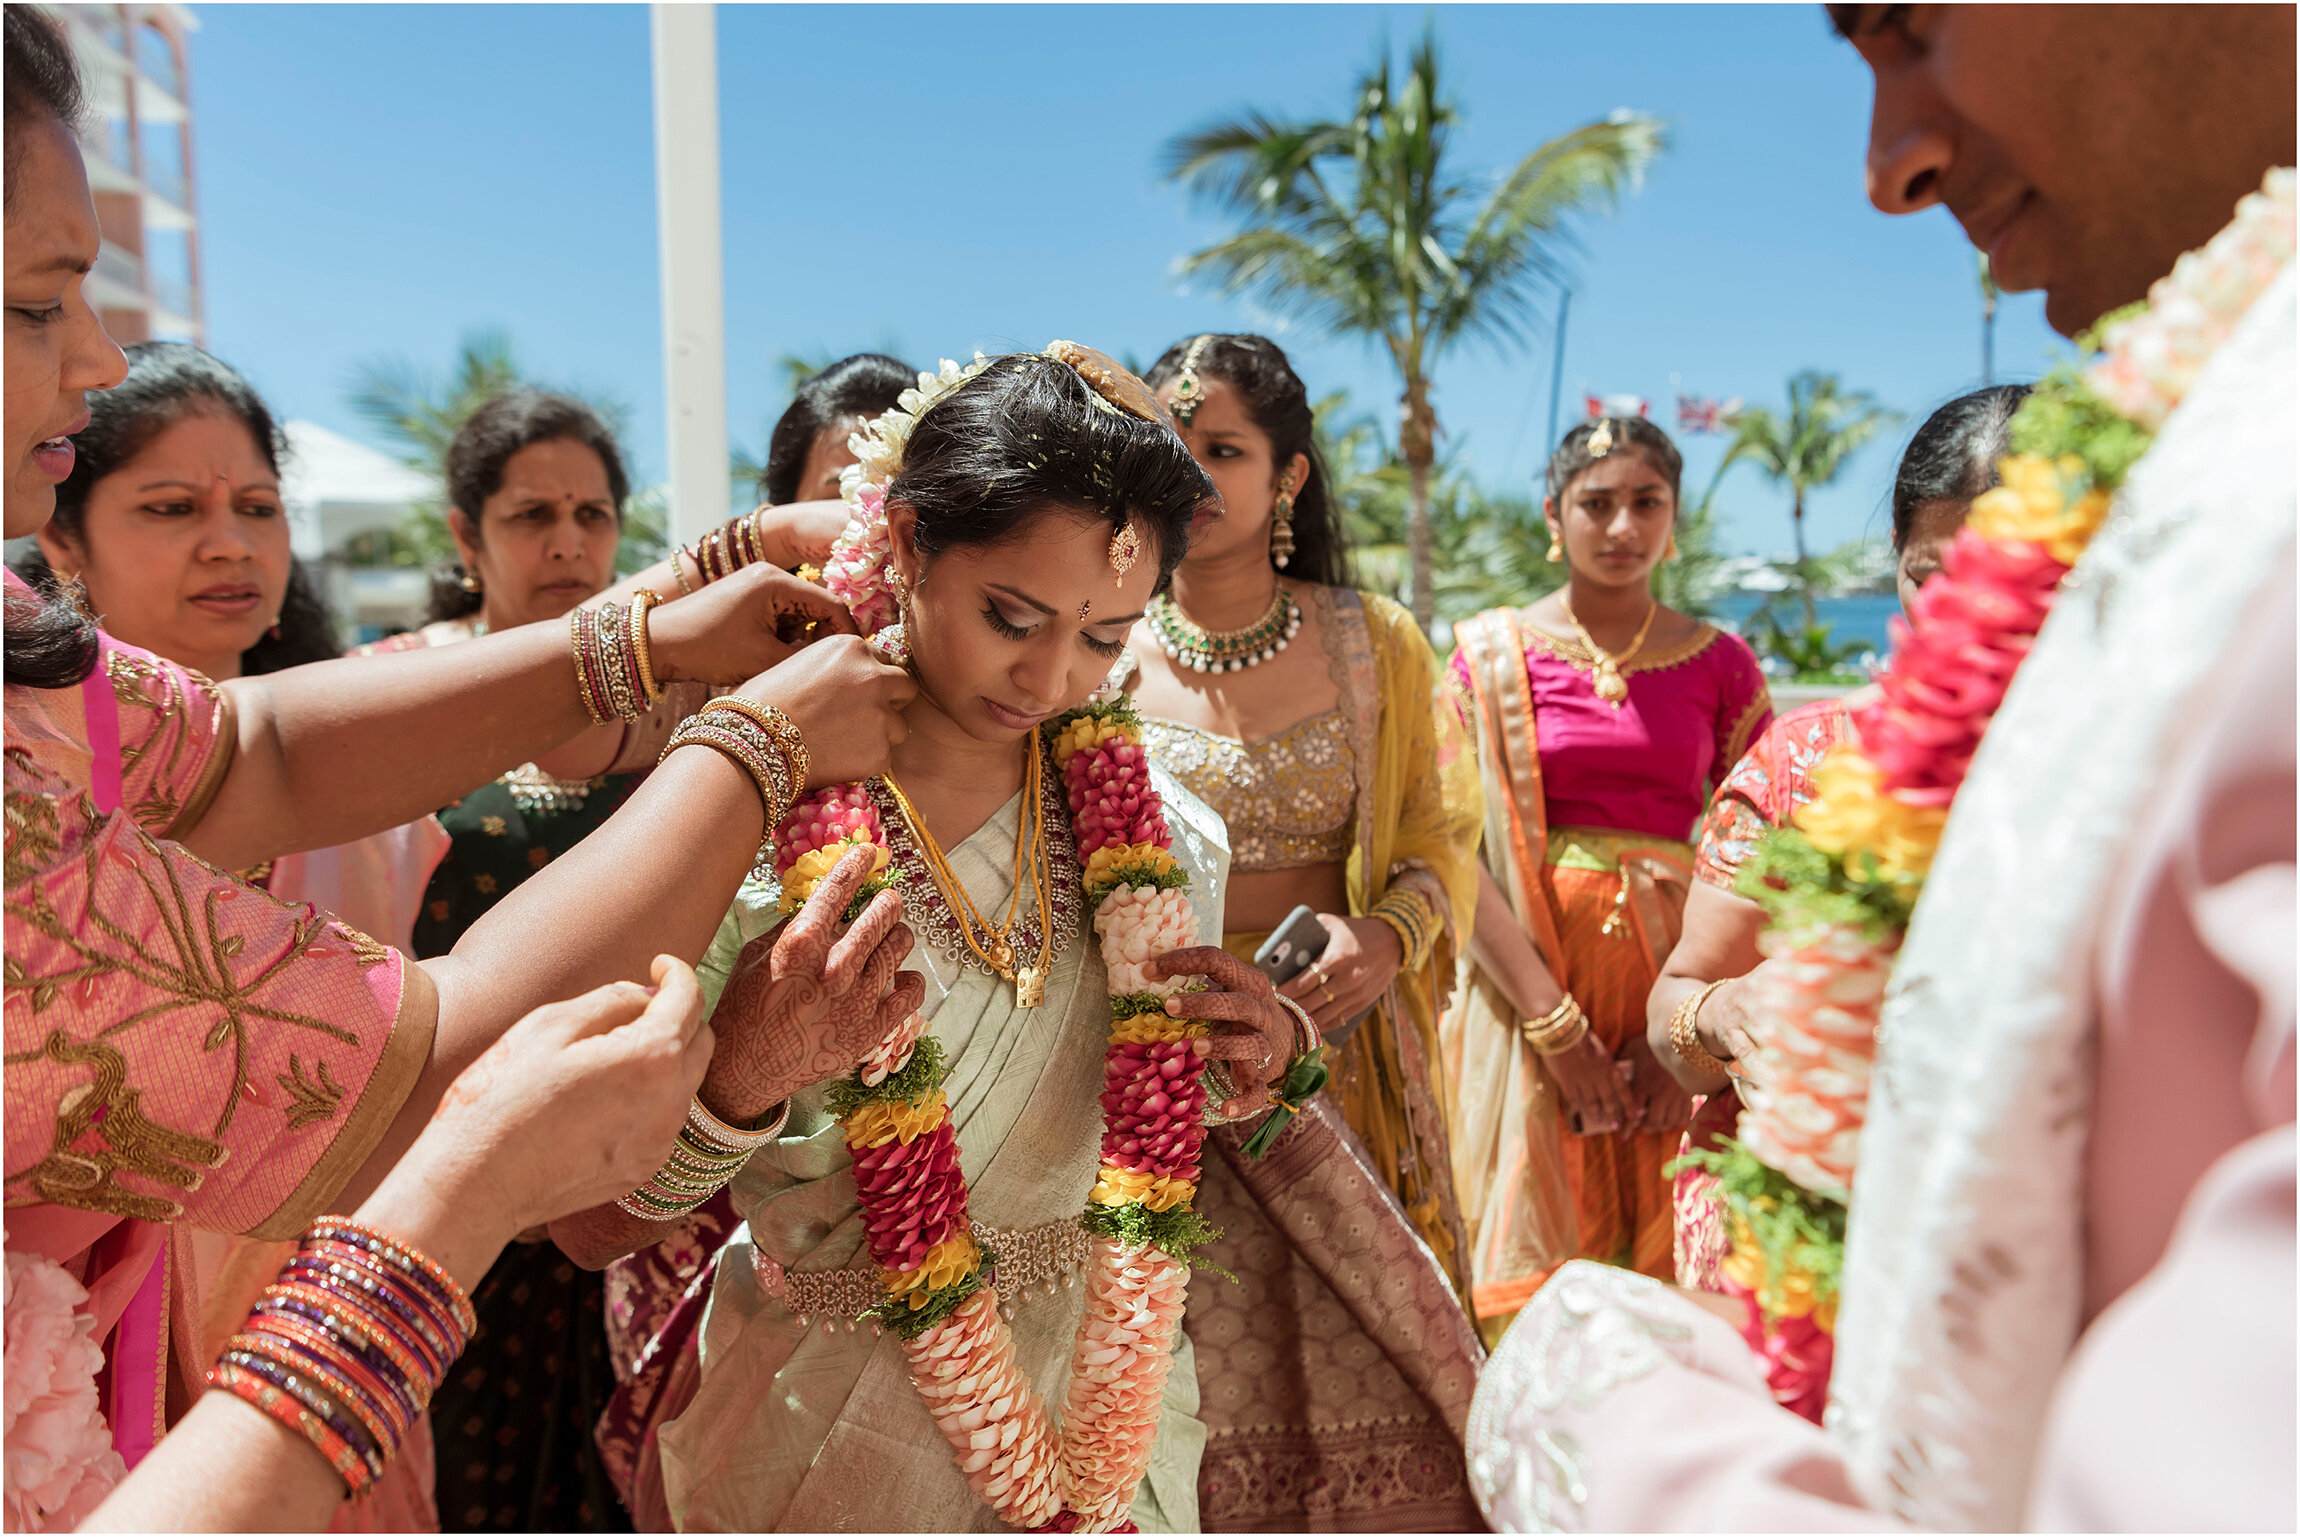 ©FianderFoto_Hindu Wedding_Bermuda_085.jpg